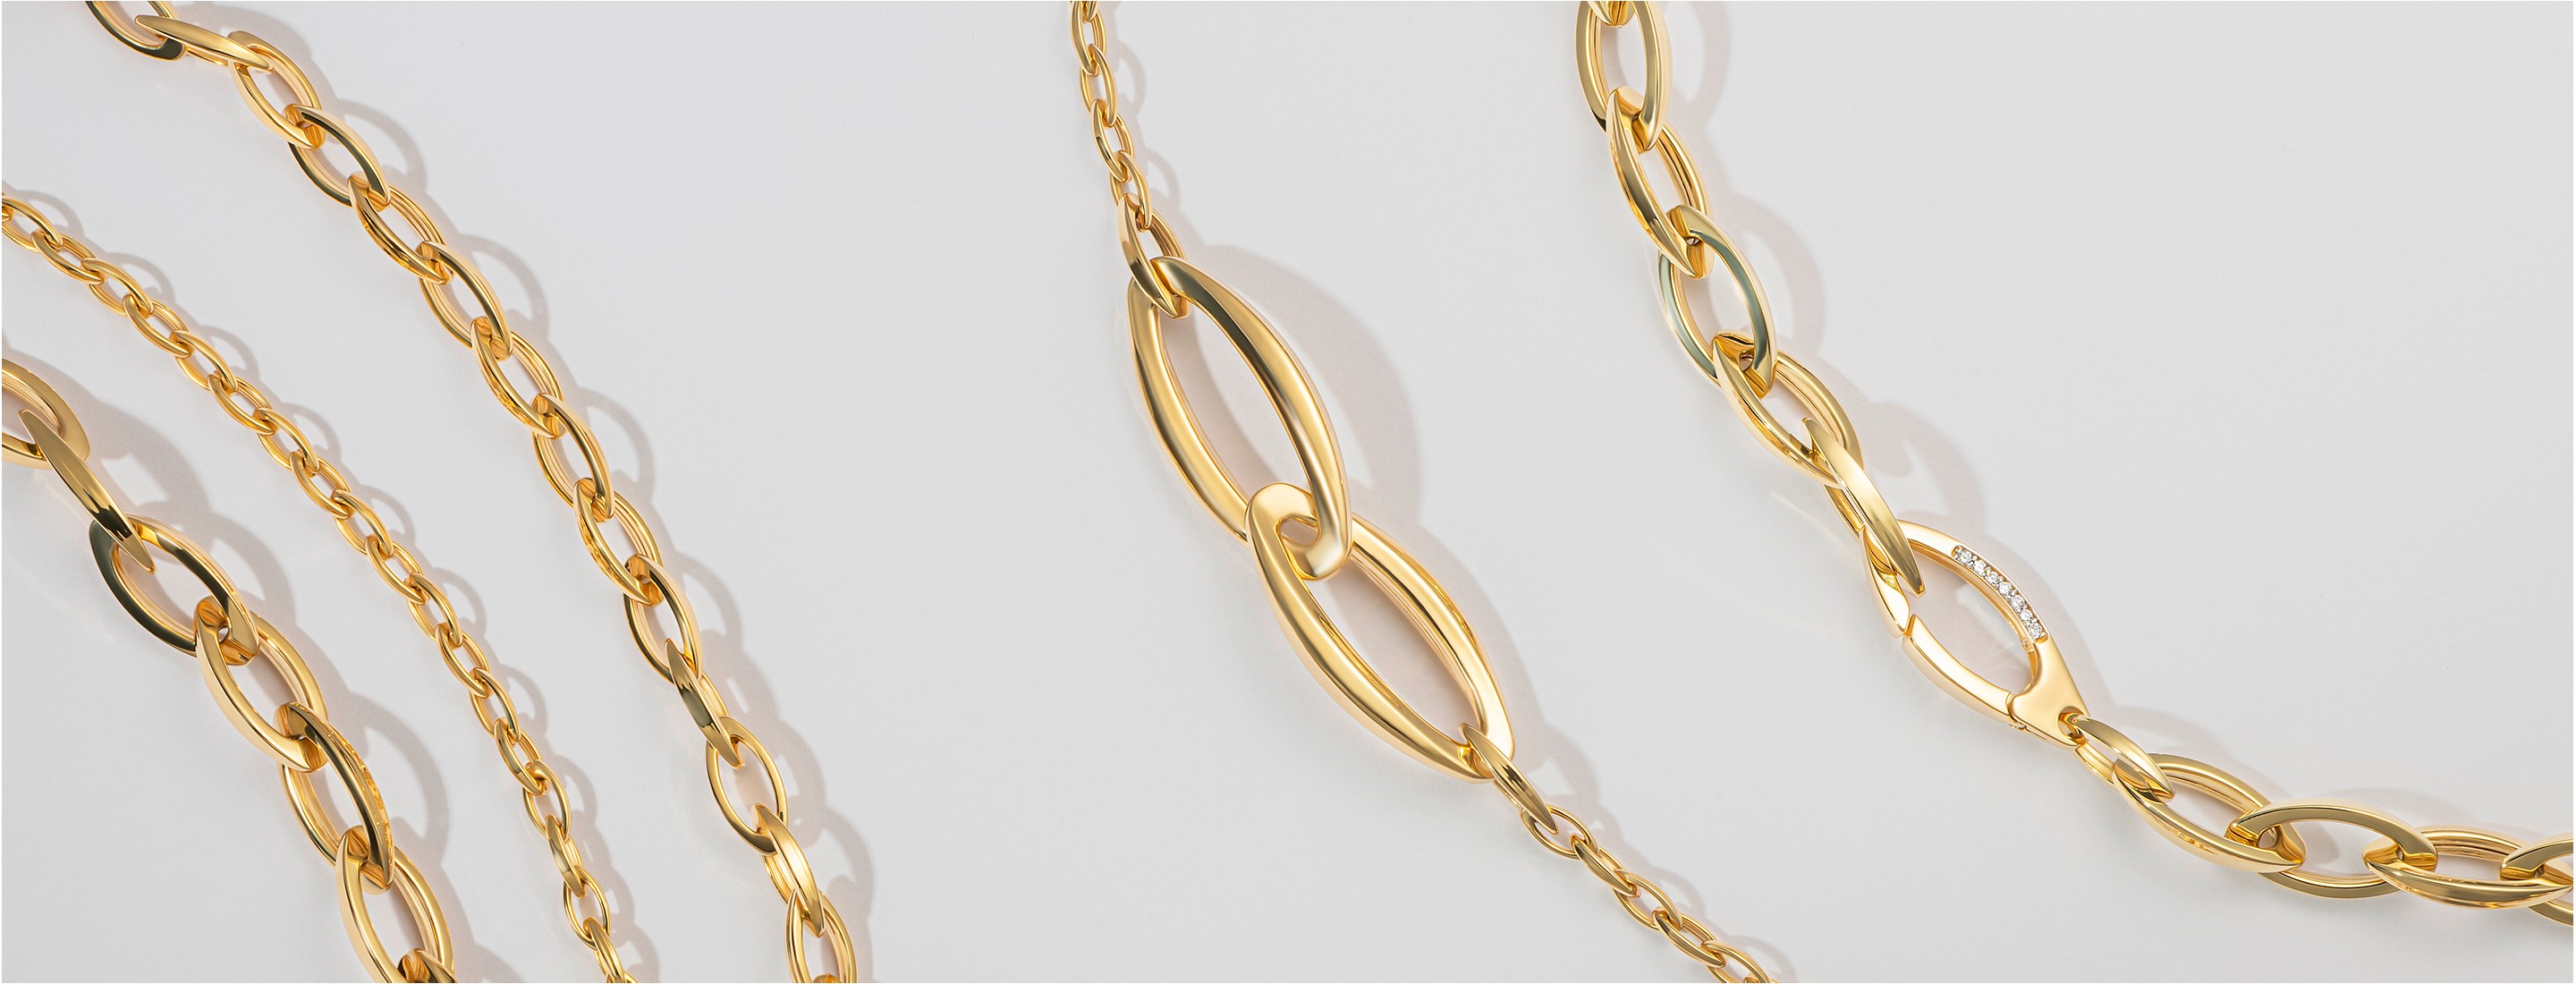 Charming chain jewelry with diamonds | LINK Sensi | CHIMENTO